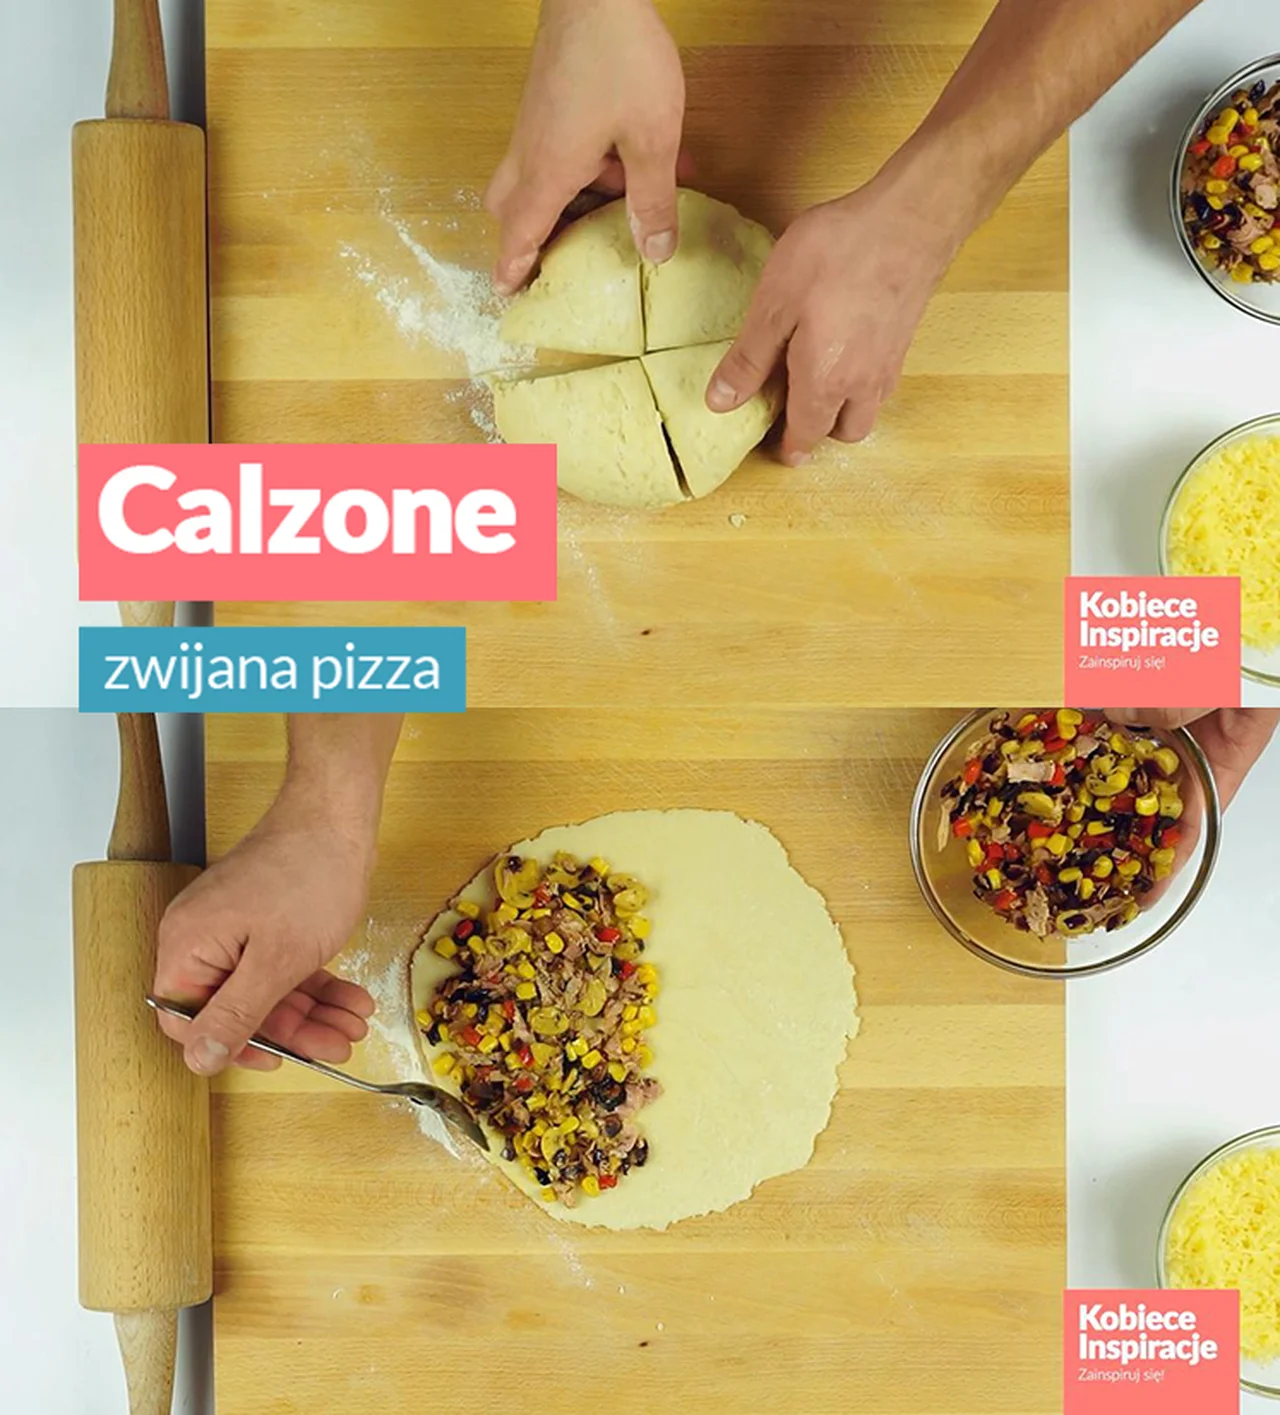 Calzone - zwijana pizza